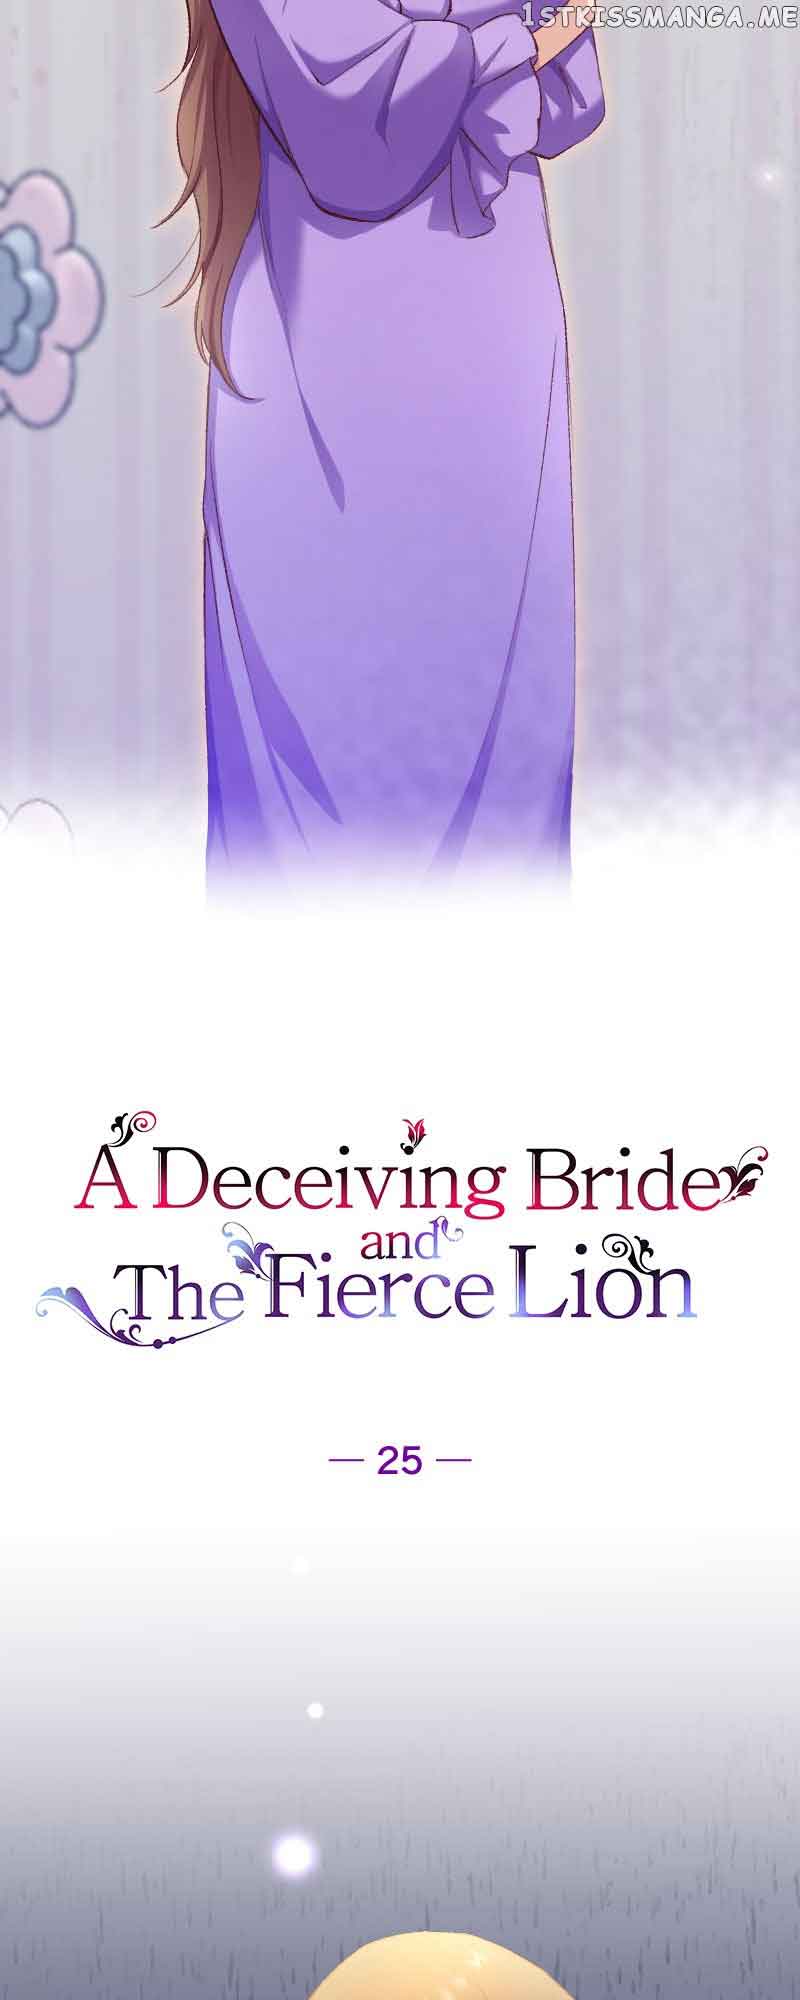 A Deceiving Bride And The Fierce Lion - 25 page 6-c691c129